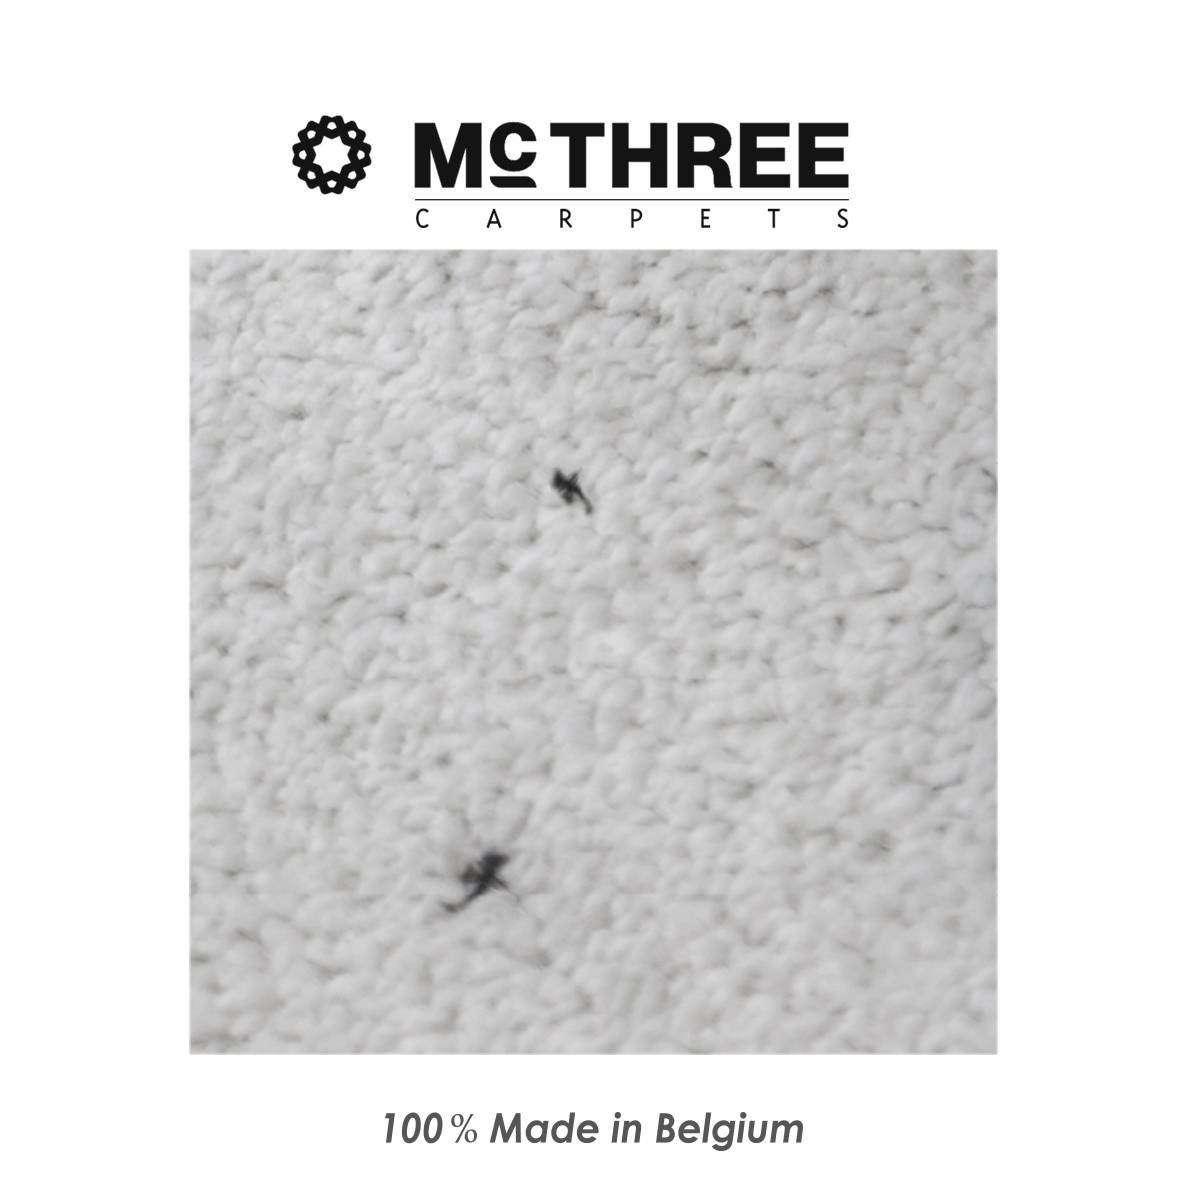 Mc ThreeSpots Carpet 맥쓰리 스팟 카페트